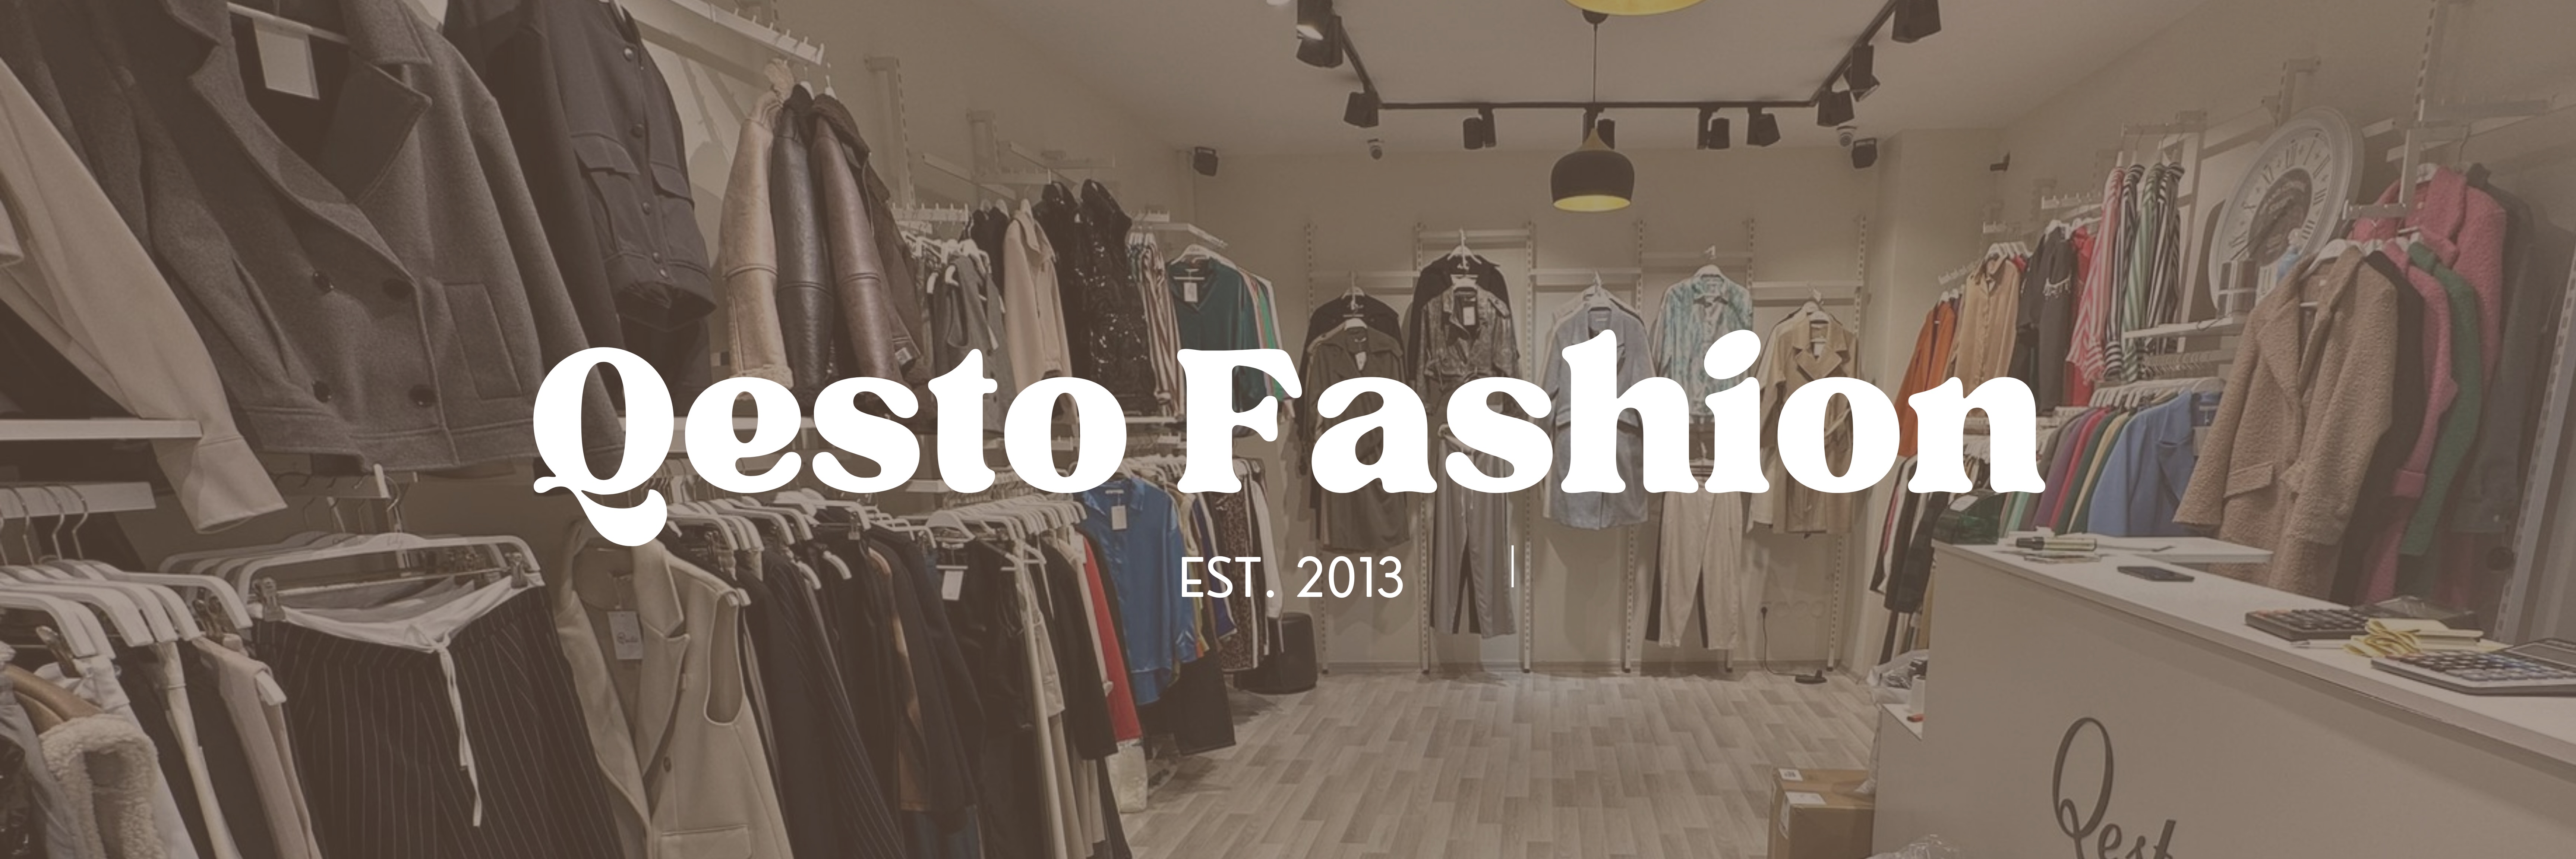 Wholesale Qesto Fashion womens clothing products.